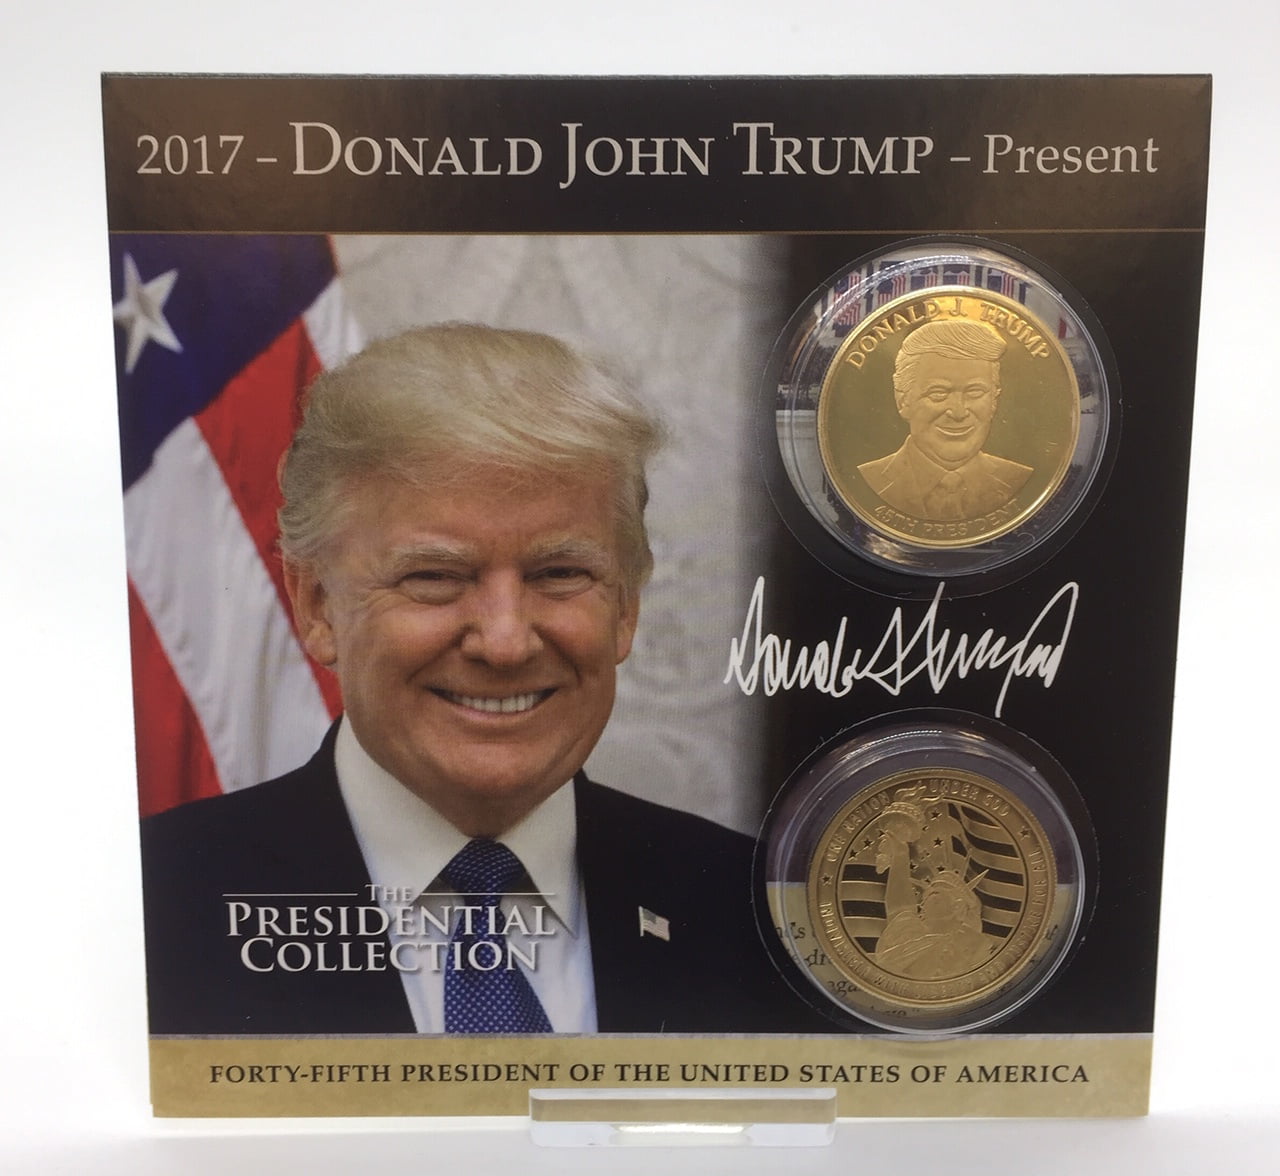 Coin Collection Commemorative Coin Persian King and Trump Commemorative Coin Memorial Coin Persian King and Trump Collection 